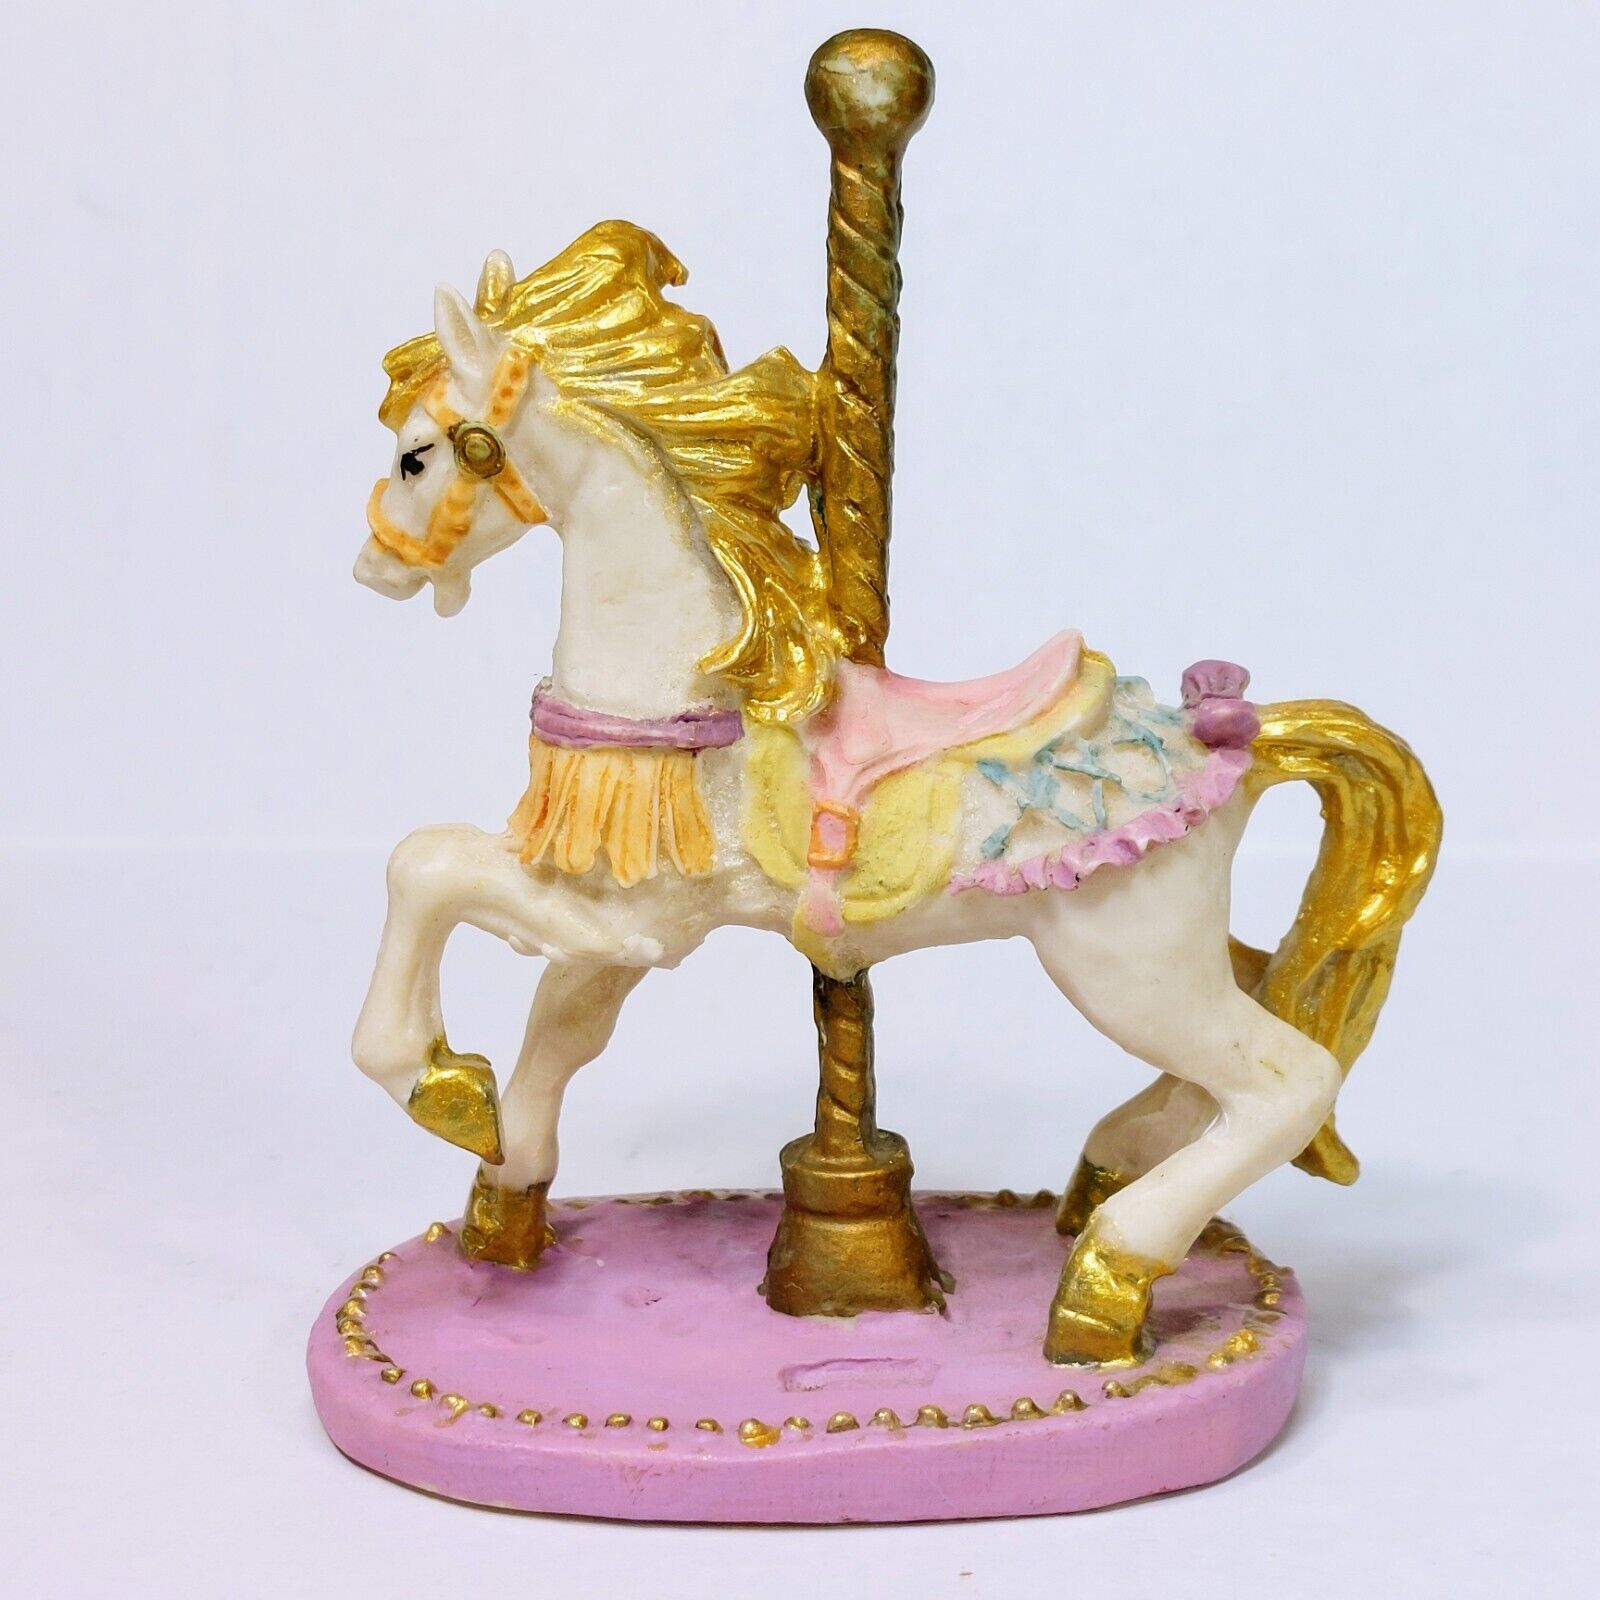 Rare Handmade Carousel Horse Collection Figurine Vintage Decor Whatnot Purple